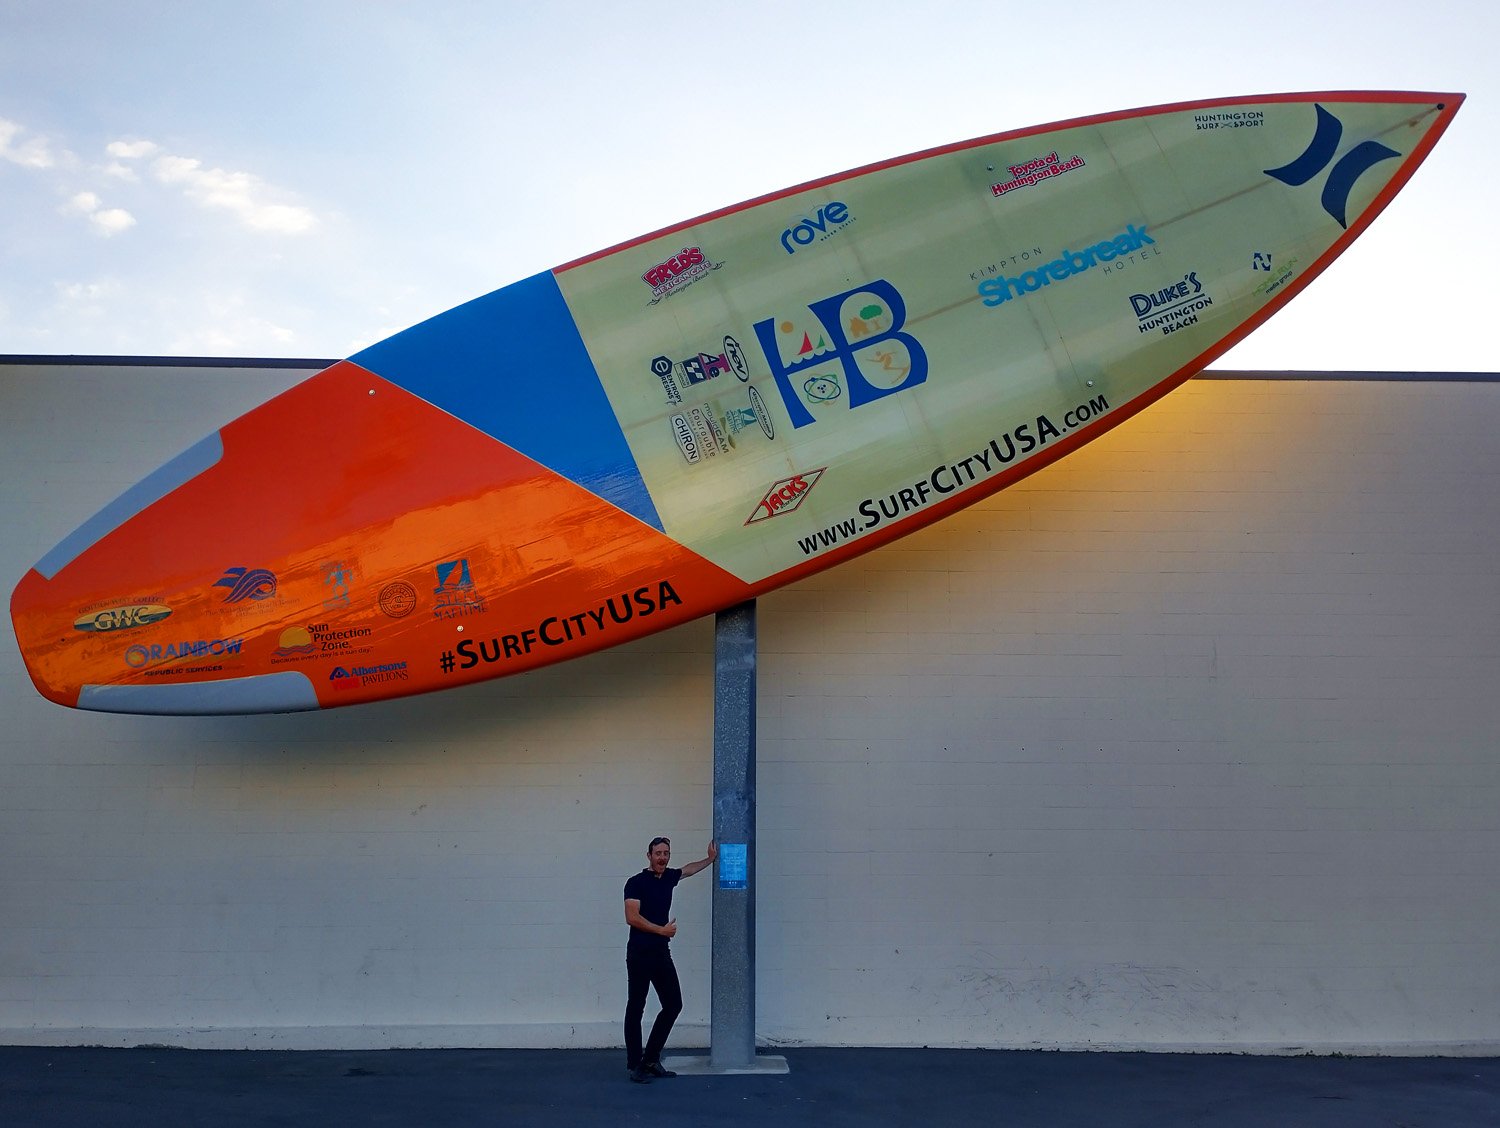 World's largest surfboard, Huntington beach, CA. It's a good one. 